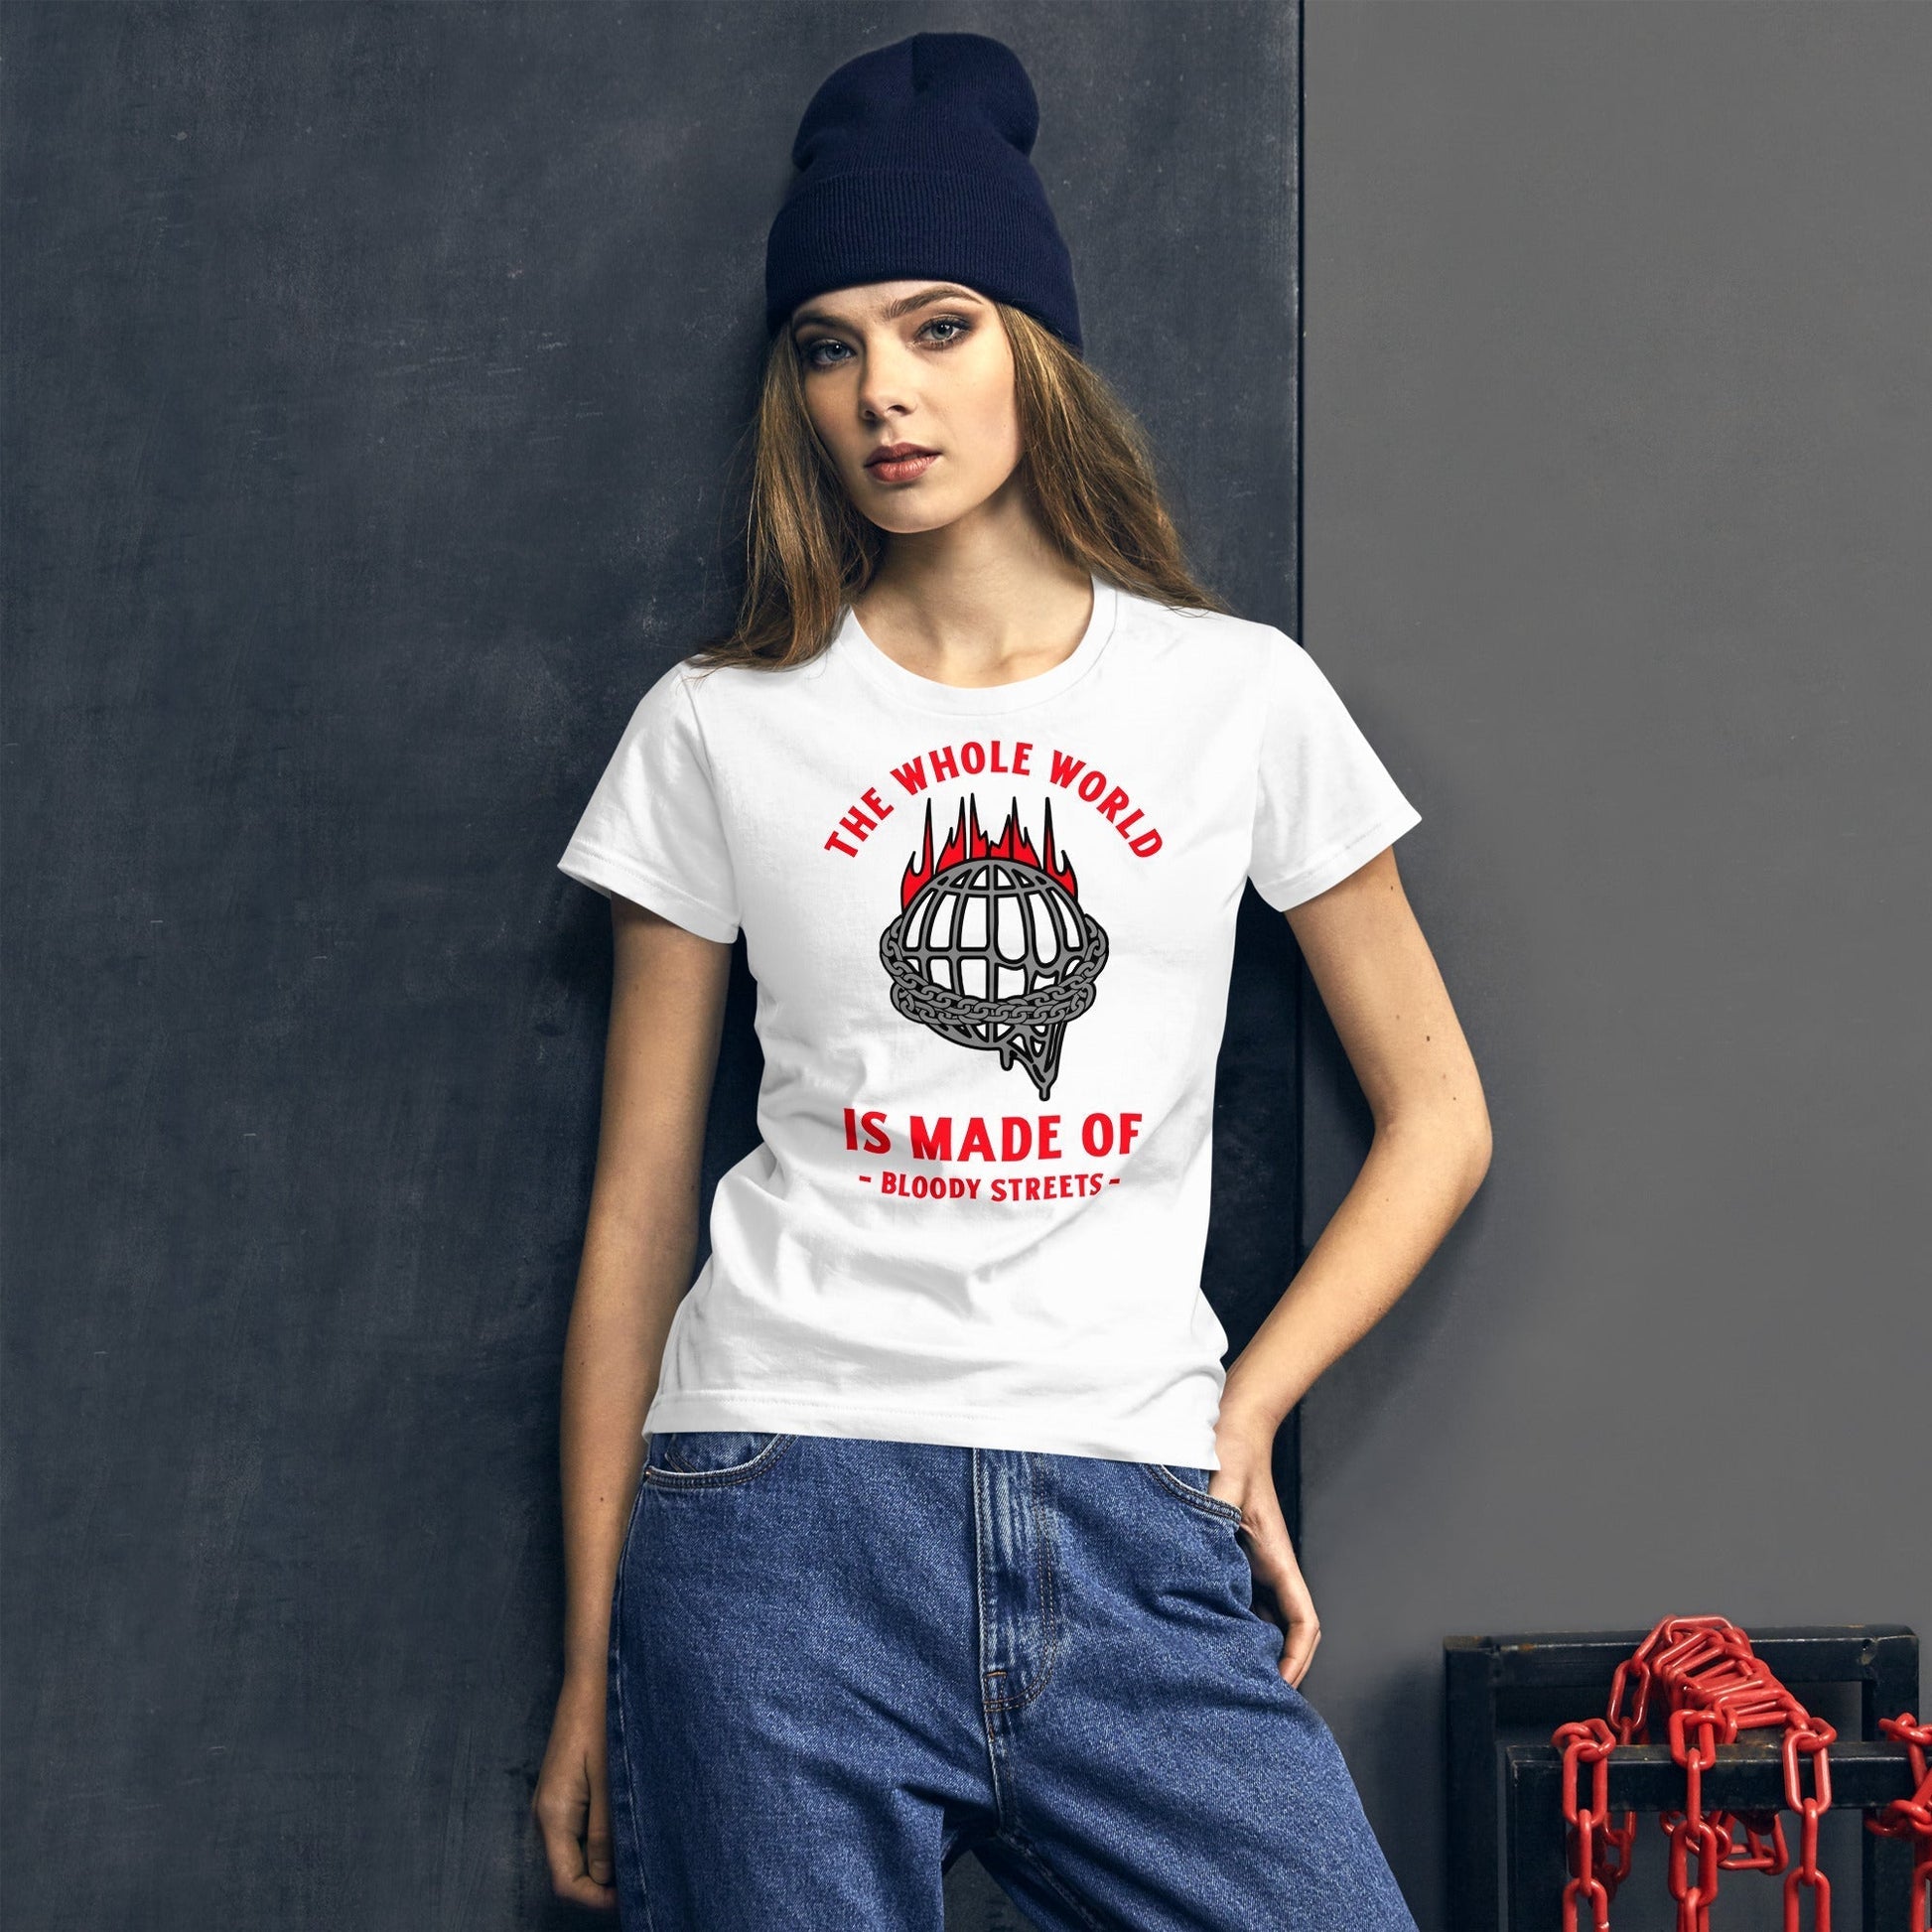 T-Shirt Damen - Whole World of the Bloody Streets - PREMIUM - BLOODY-STREETS.DE Streetwear Herren und Damen Hoodies, T-Shirts, Pullis